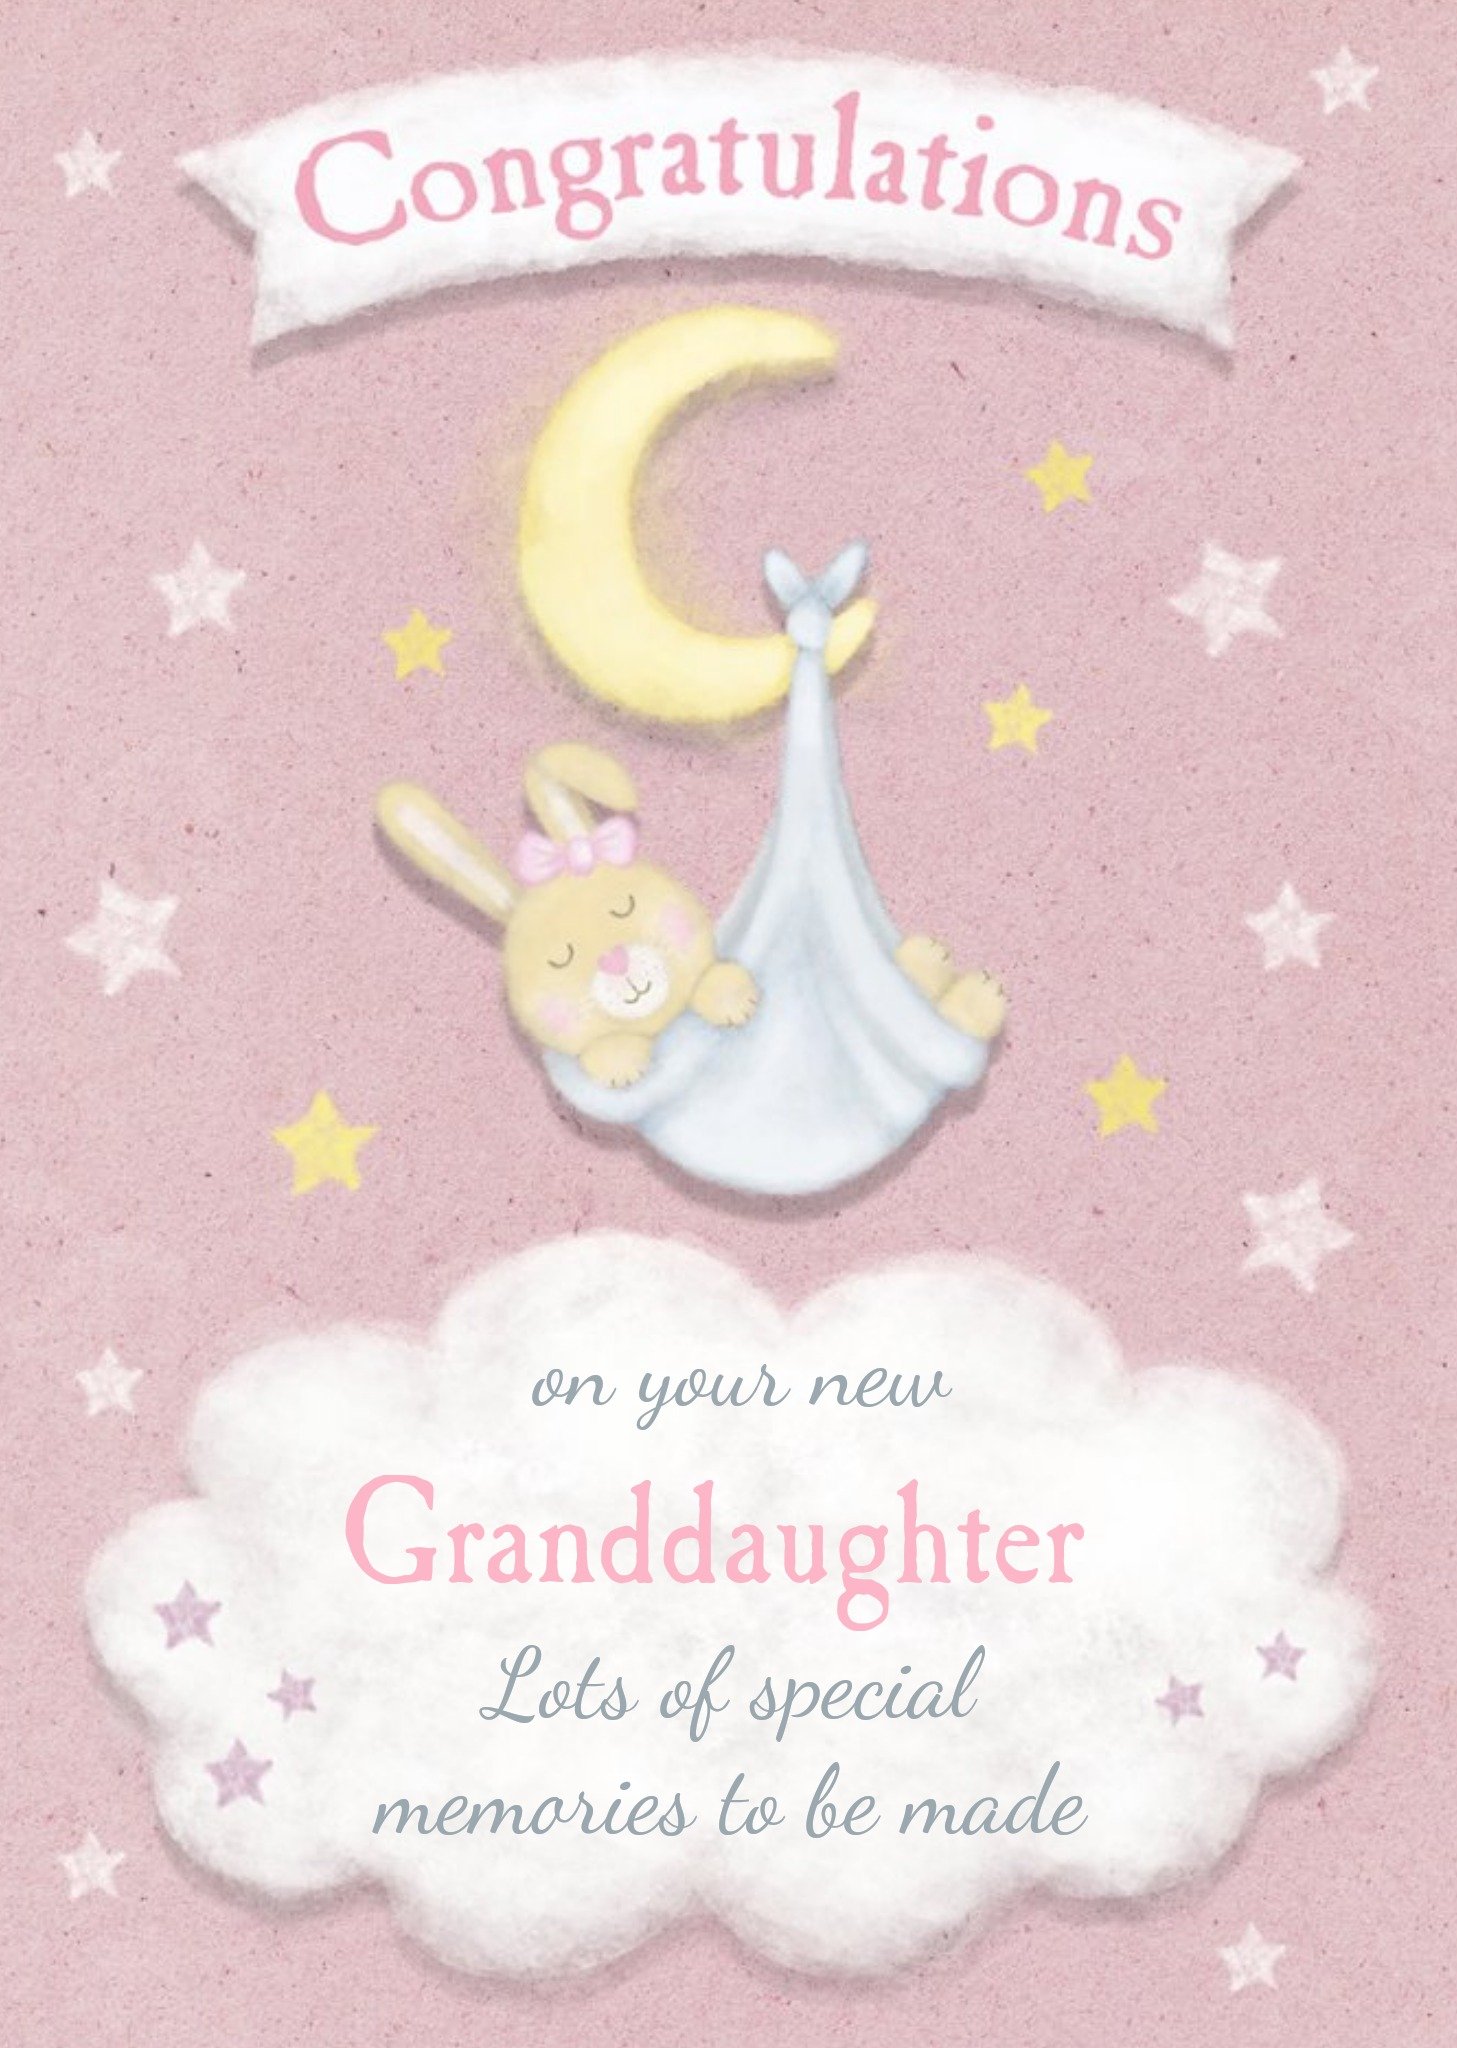 Moonpig New Granddaughter Congratulations Postcard